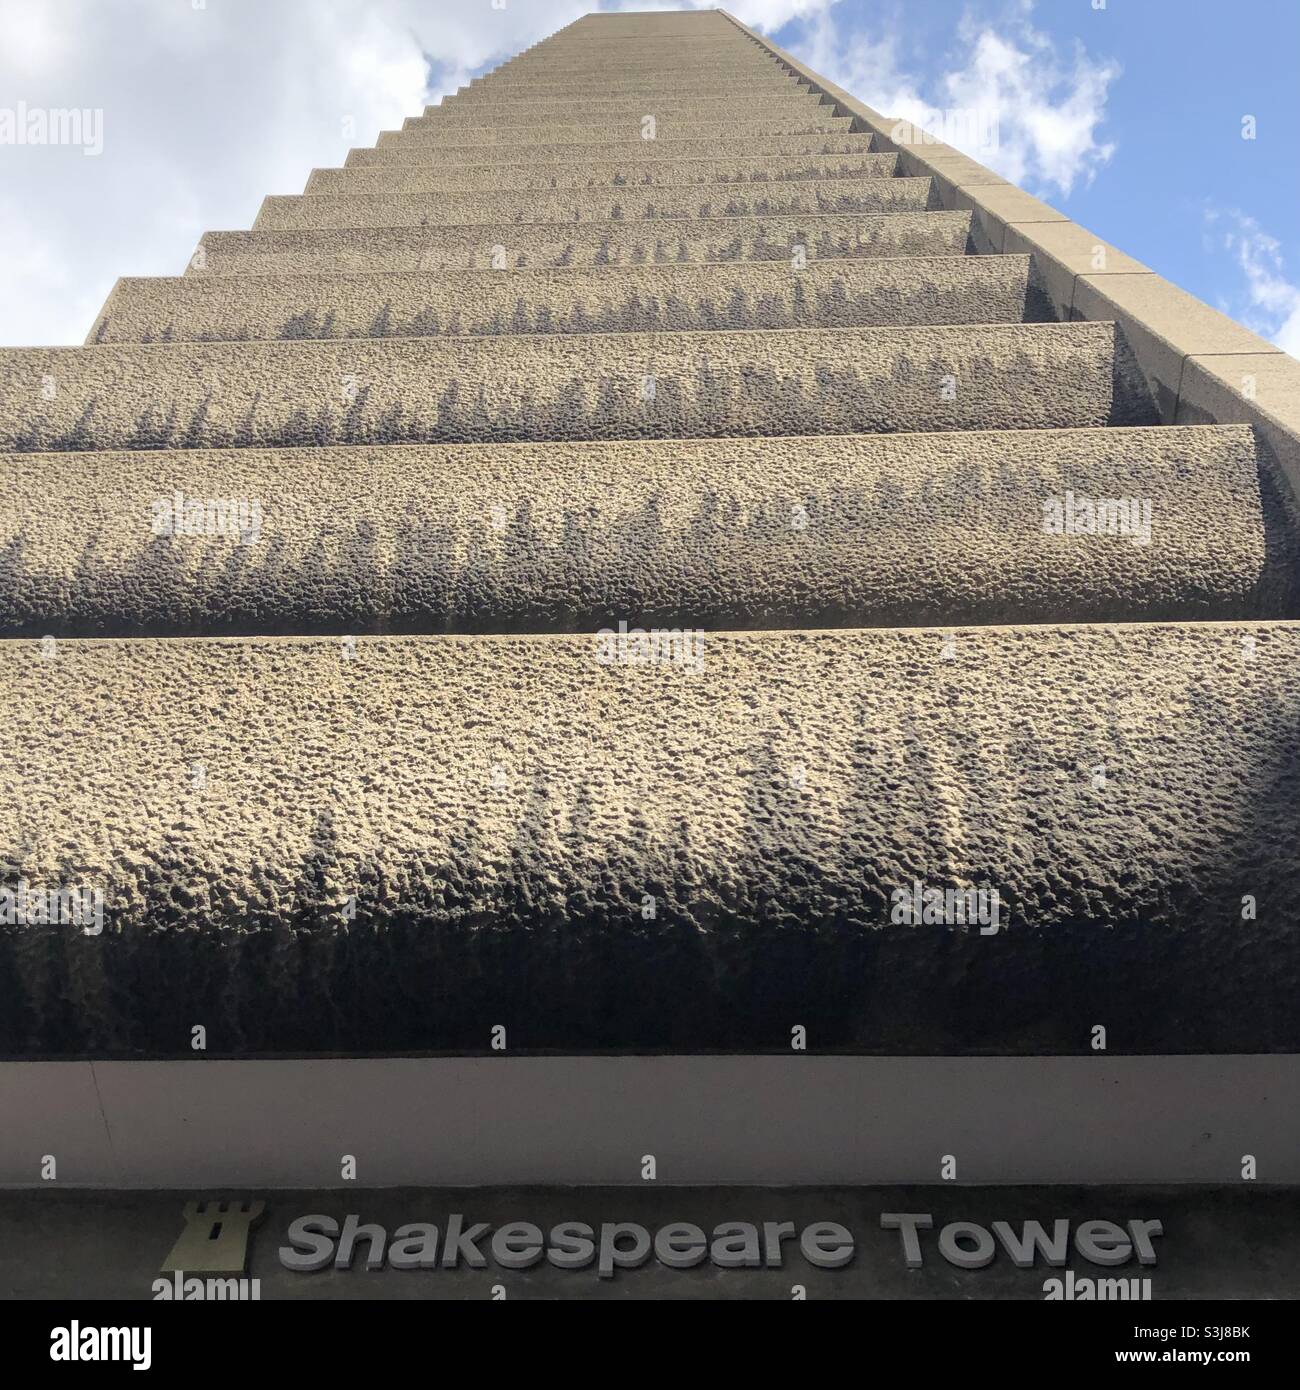 Shakespeare Tower londra Foto Stock